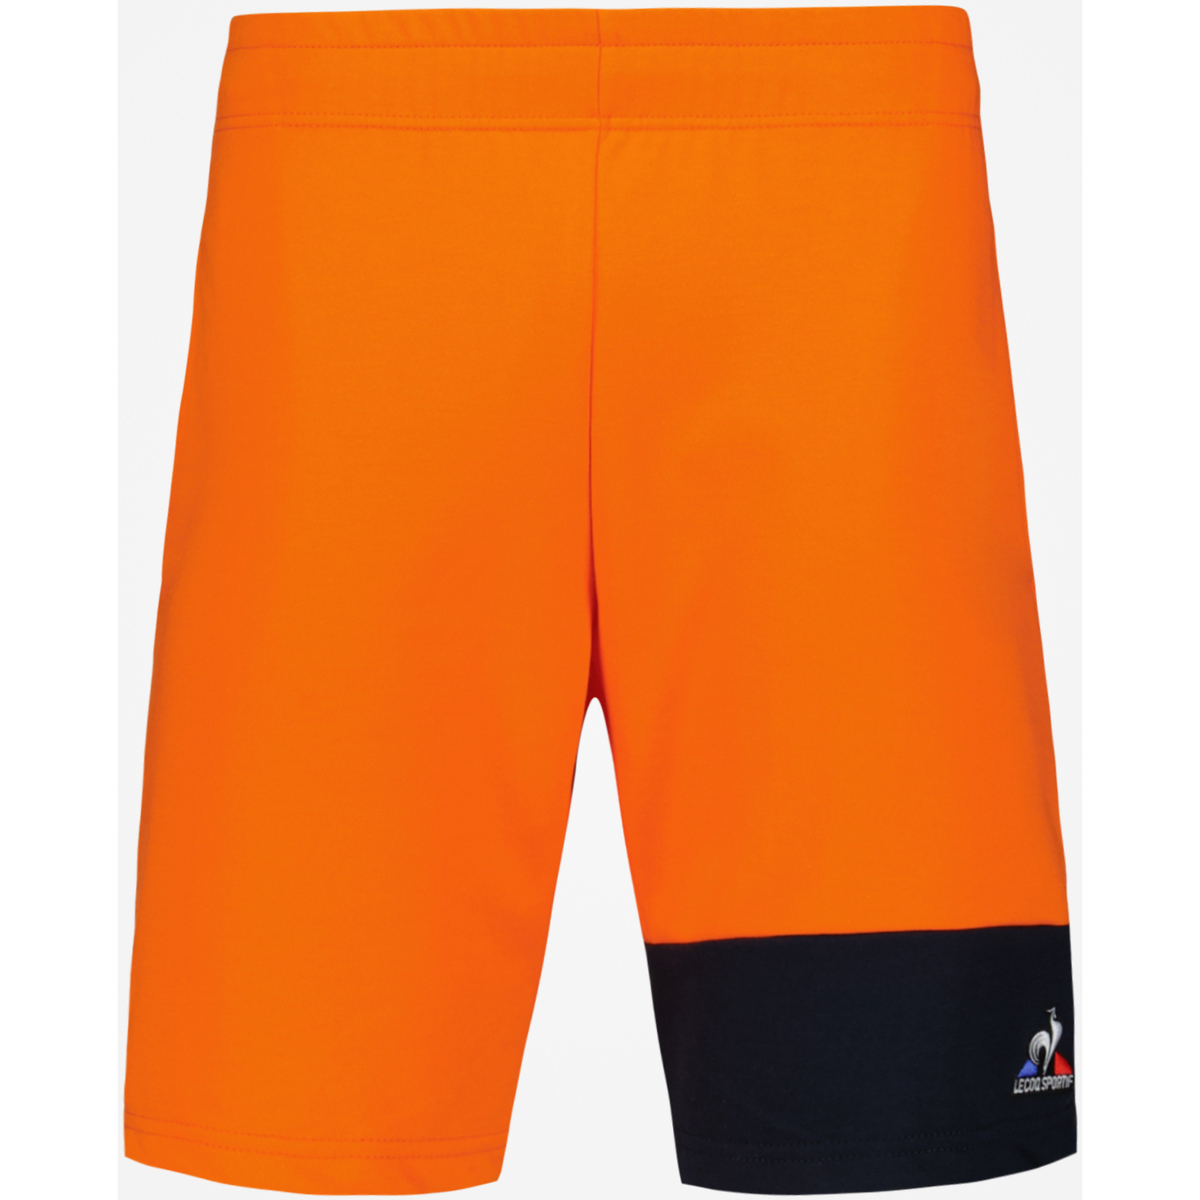 Le Coq Sportif Orange Short Homme wcBVIFEW